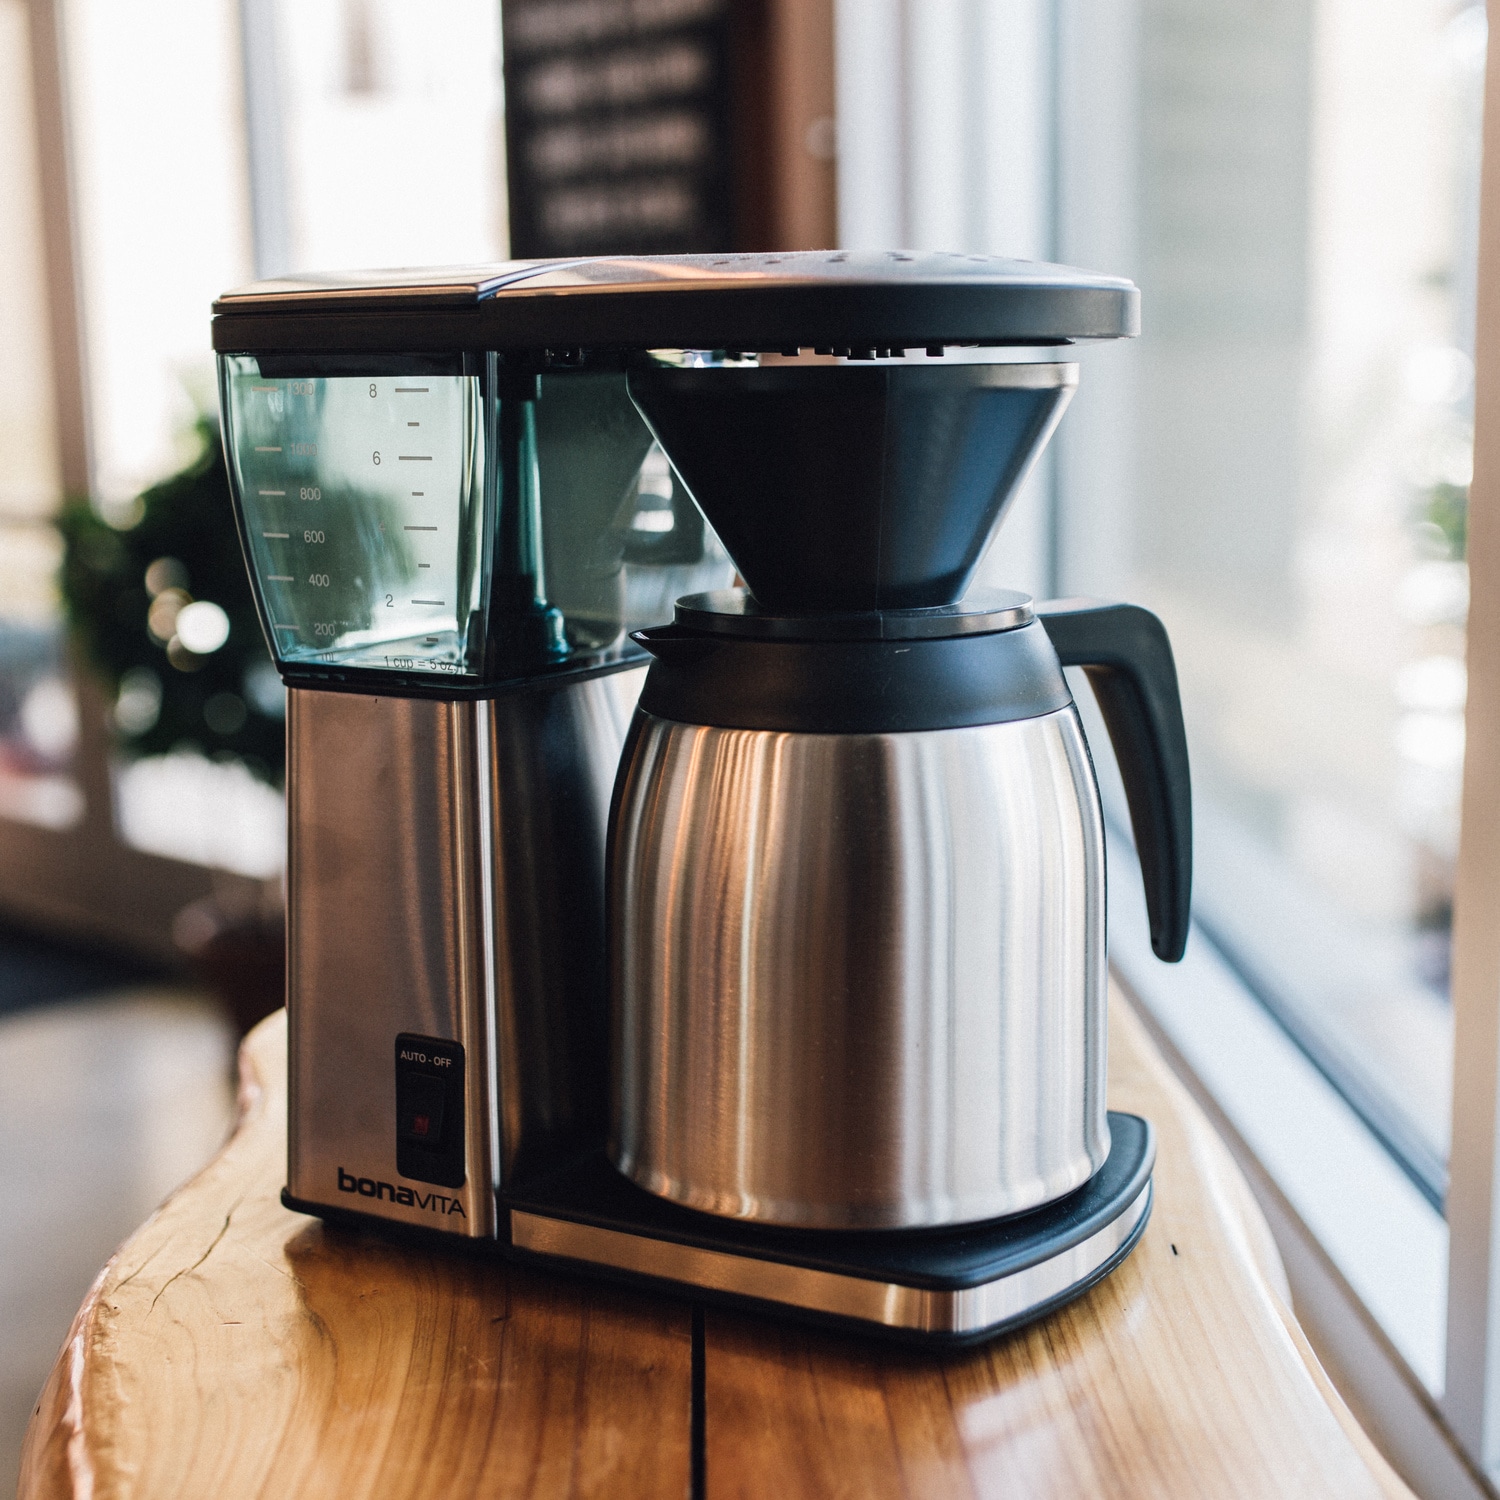 5 Best Bonavita Coffee Makers [May 2021] – Detailed Reviews